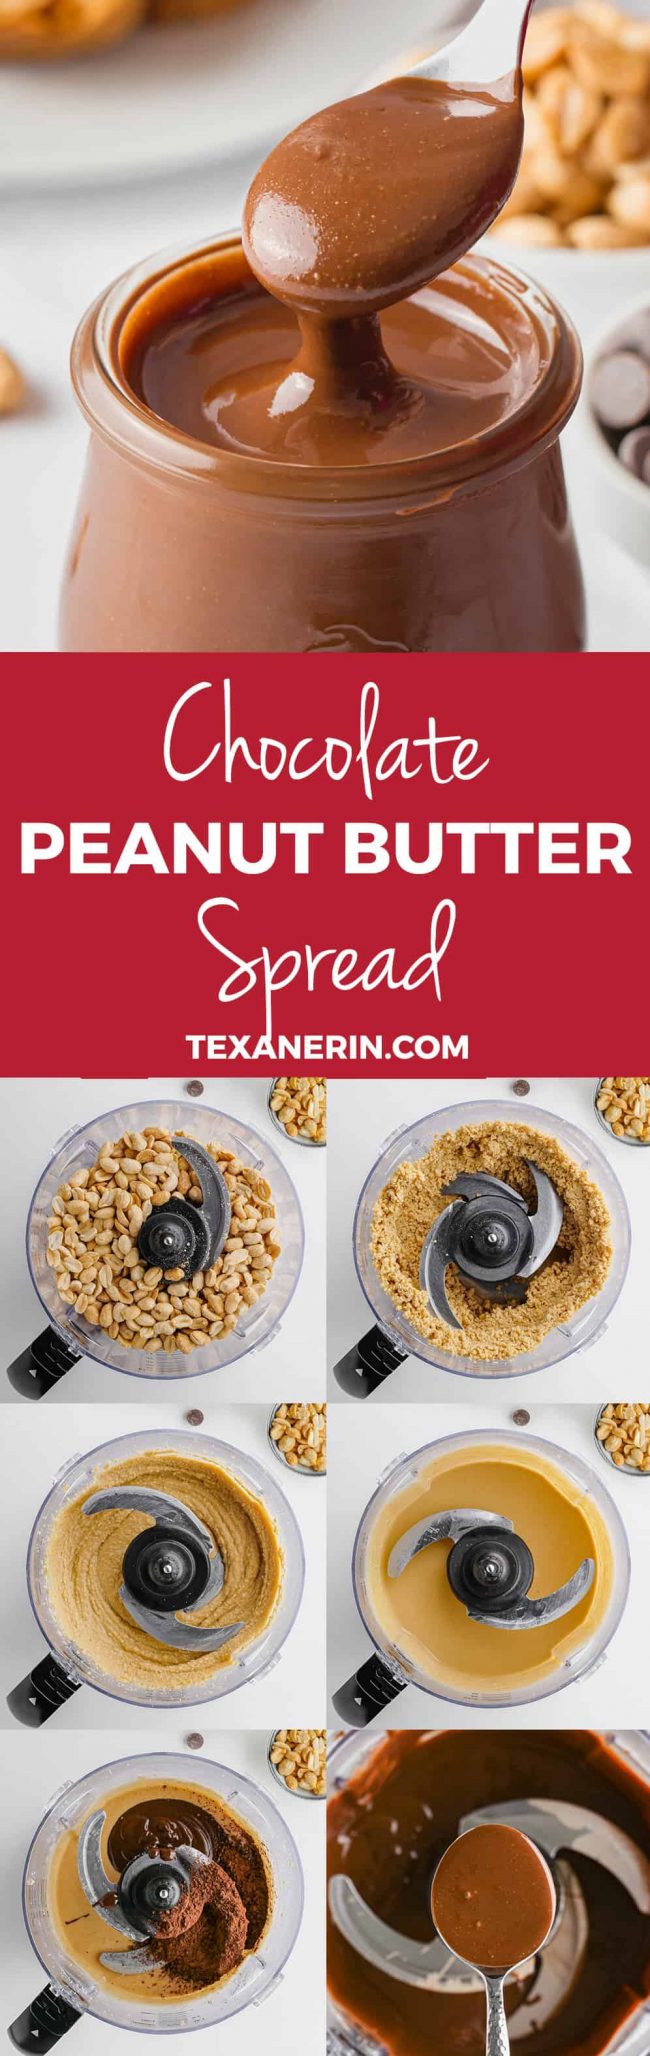 https://www.texanerin.com/content/uploads/2013/03/chocolate-peanut-butter-process-collage-1-650x2056.jpg